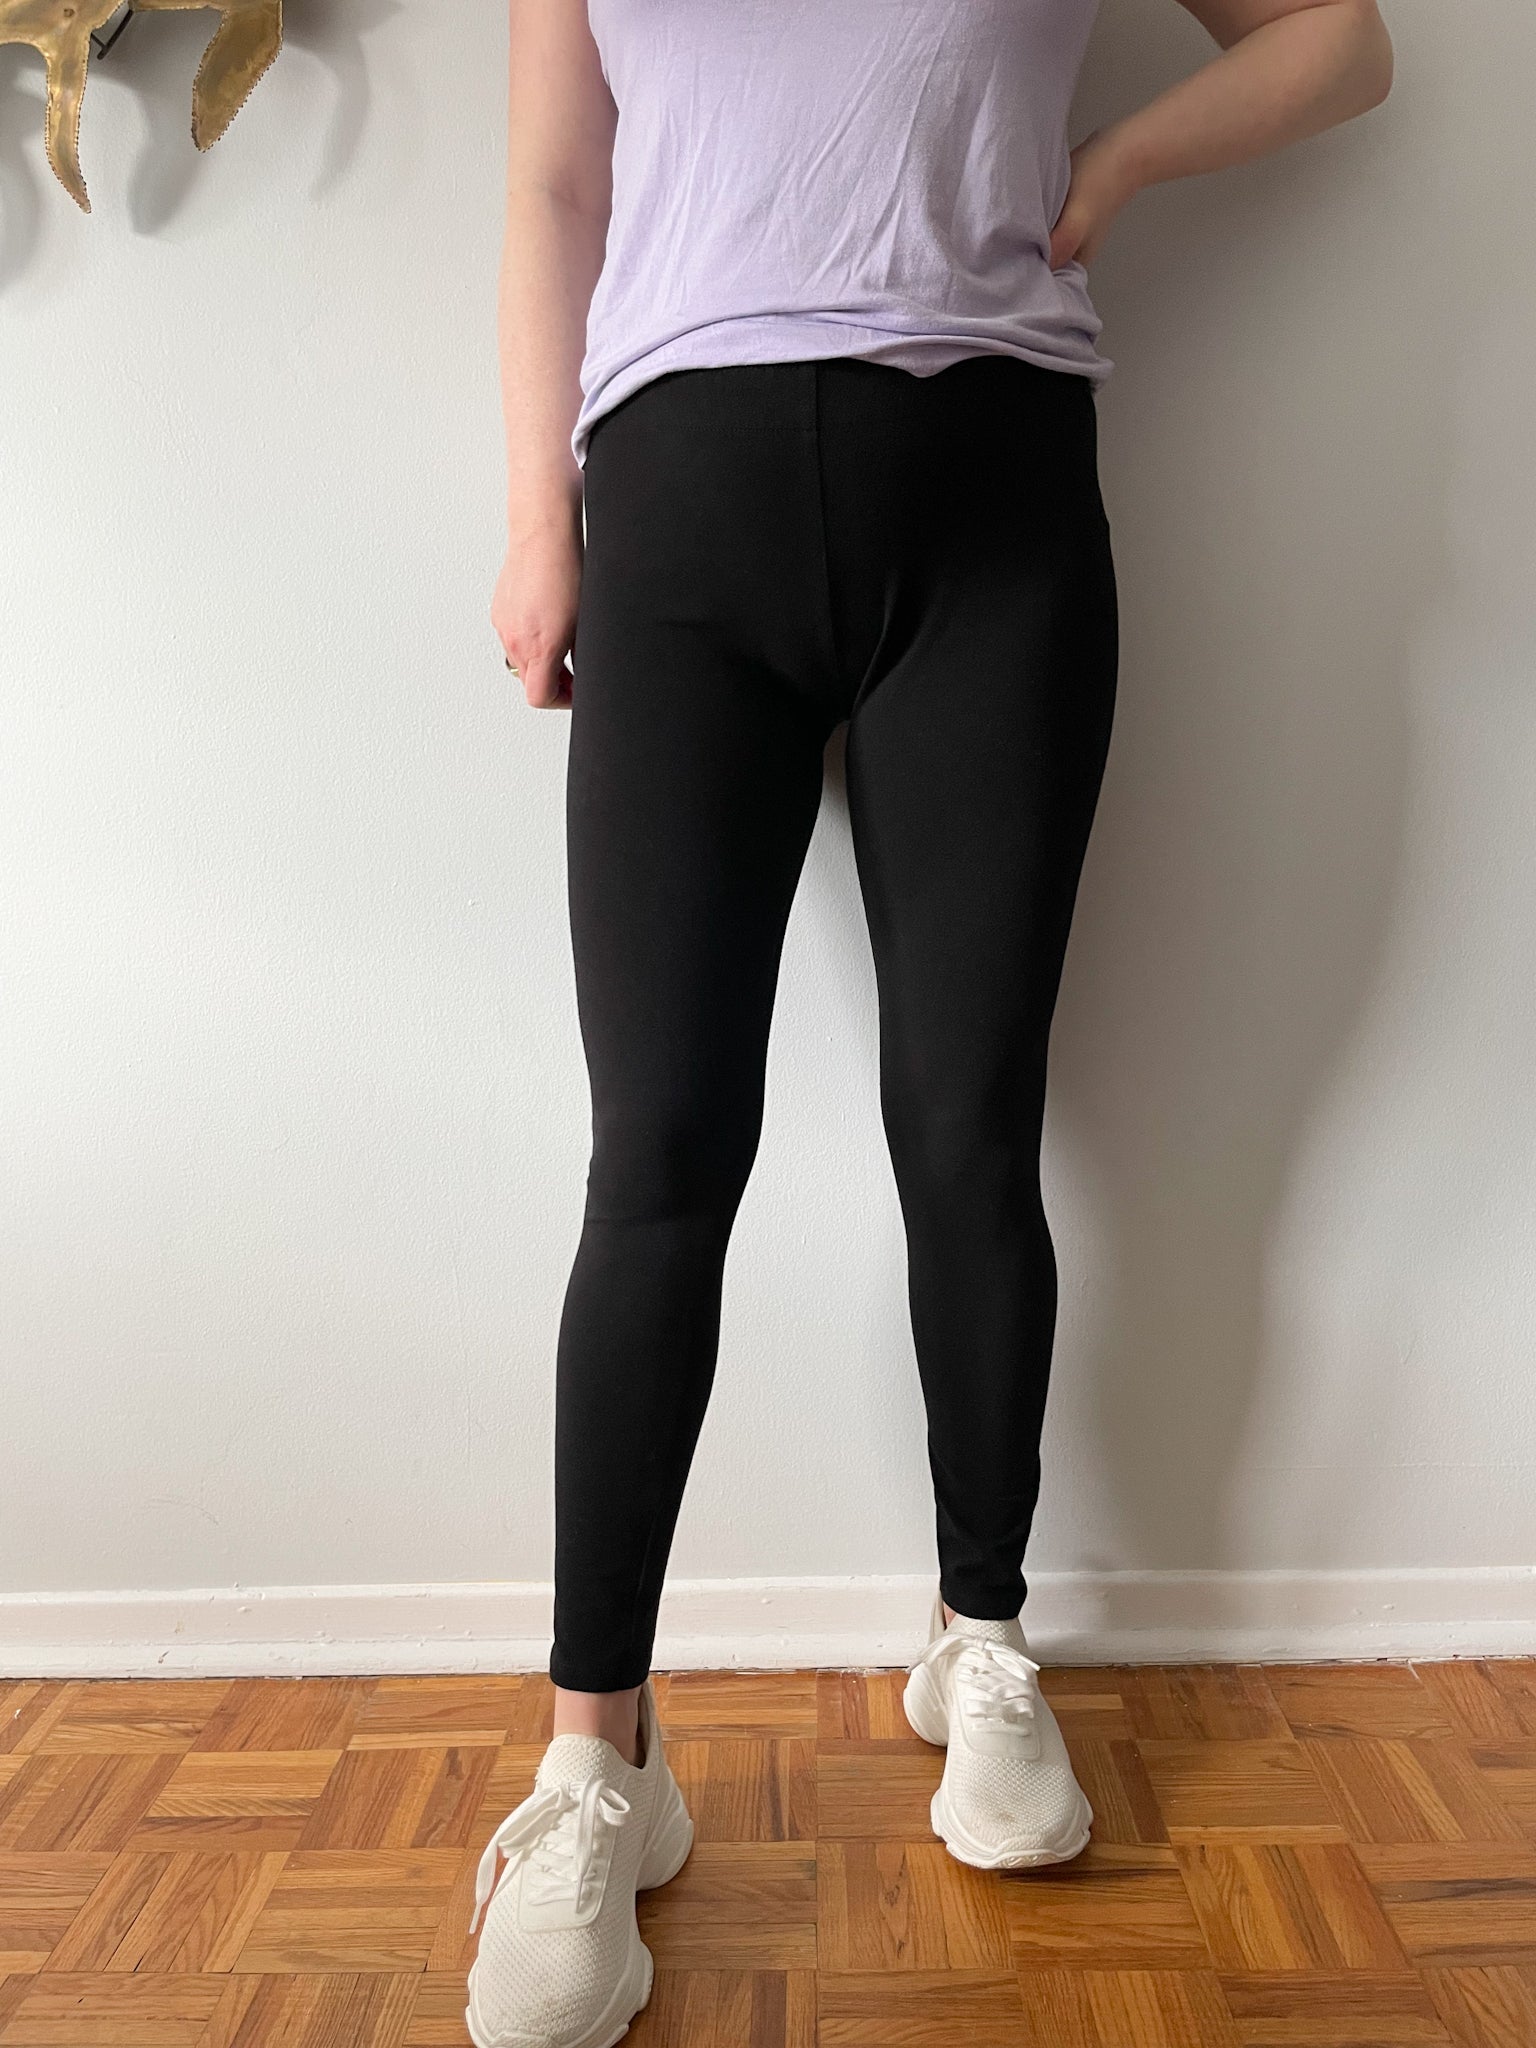 GARAGE Black Leggings Women's Small Lightweight Cotton Blend Style #11319